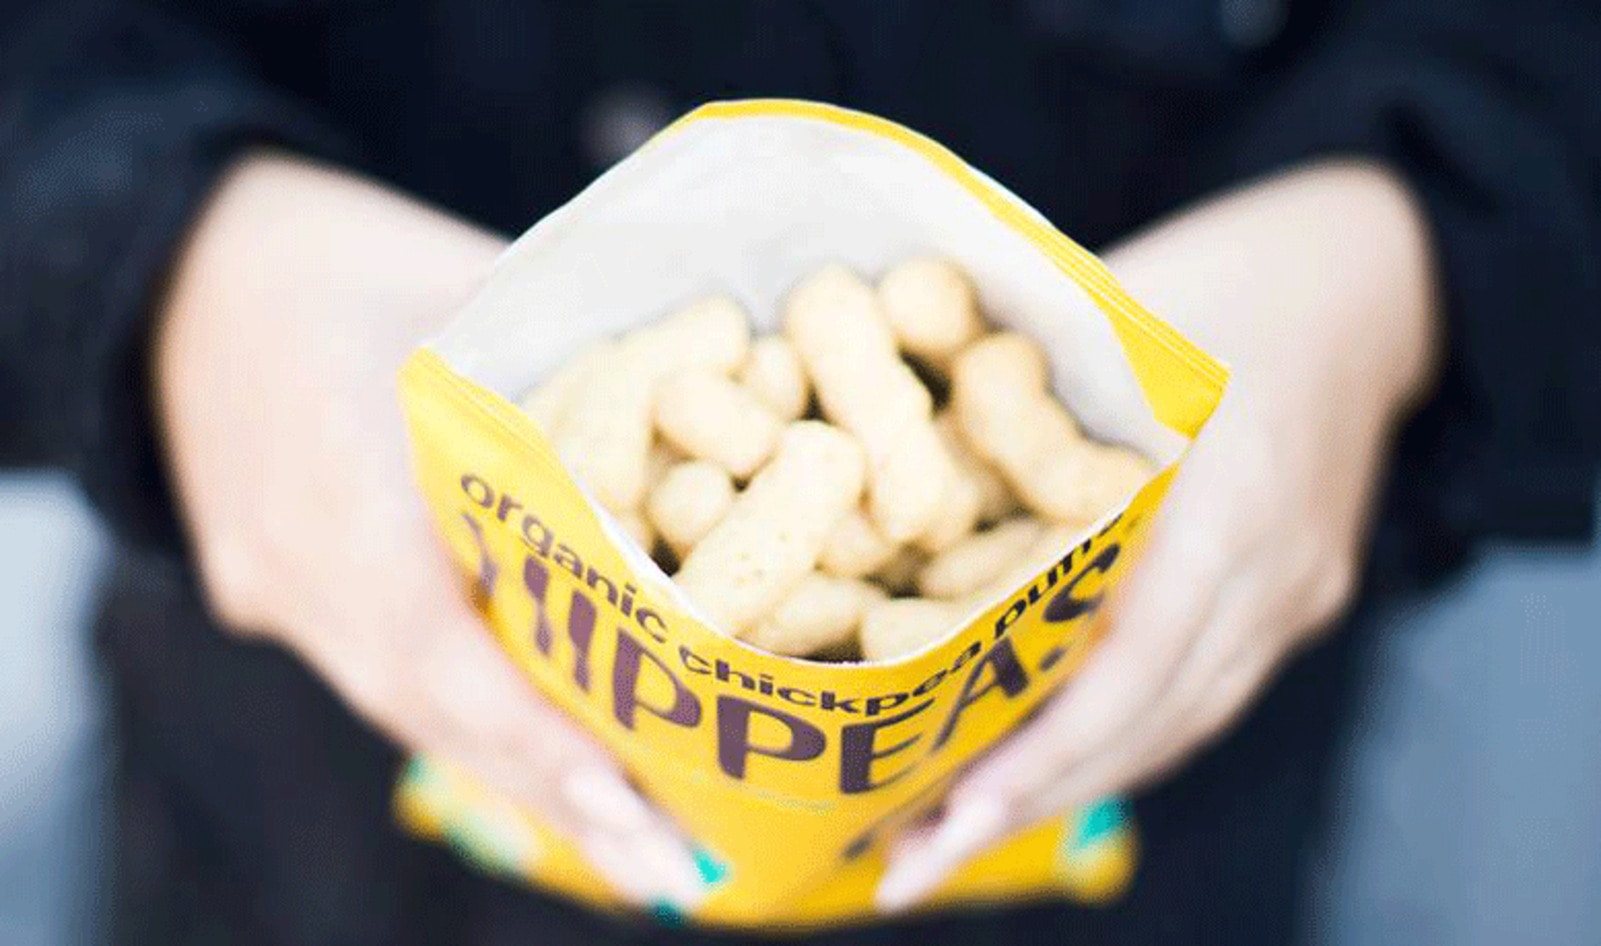 Leonardo DiCaprio-Backed Brand Launches Vegan Nacho Cheese Puffs